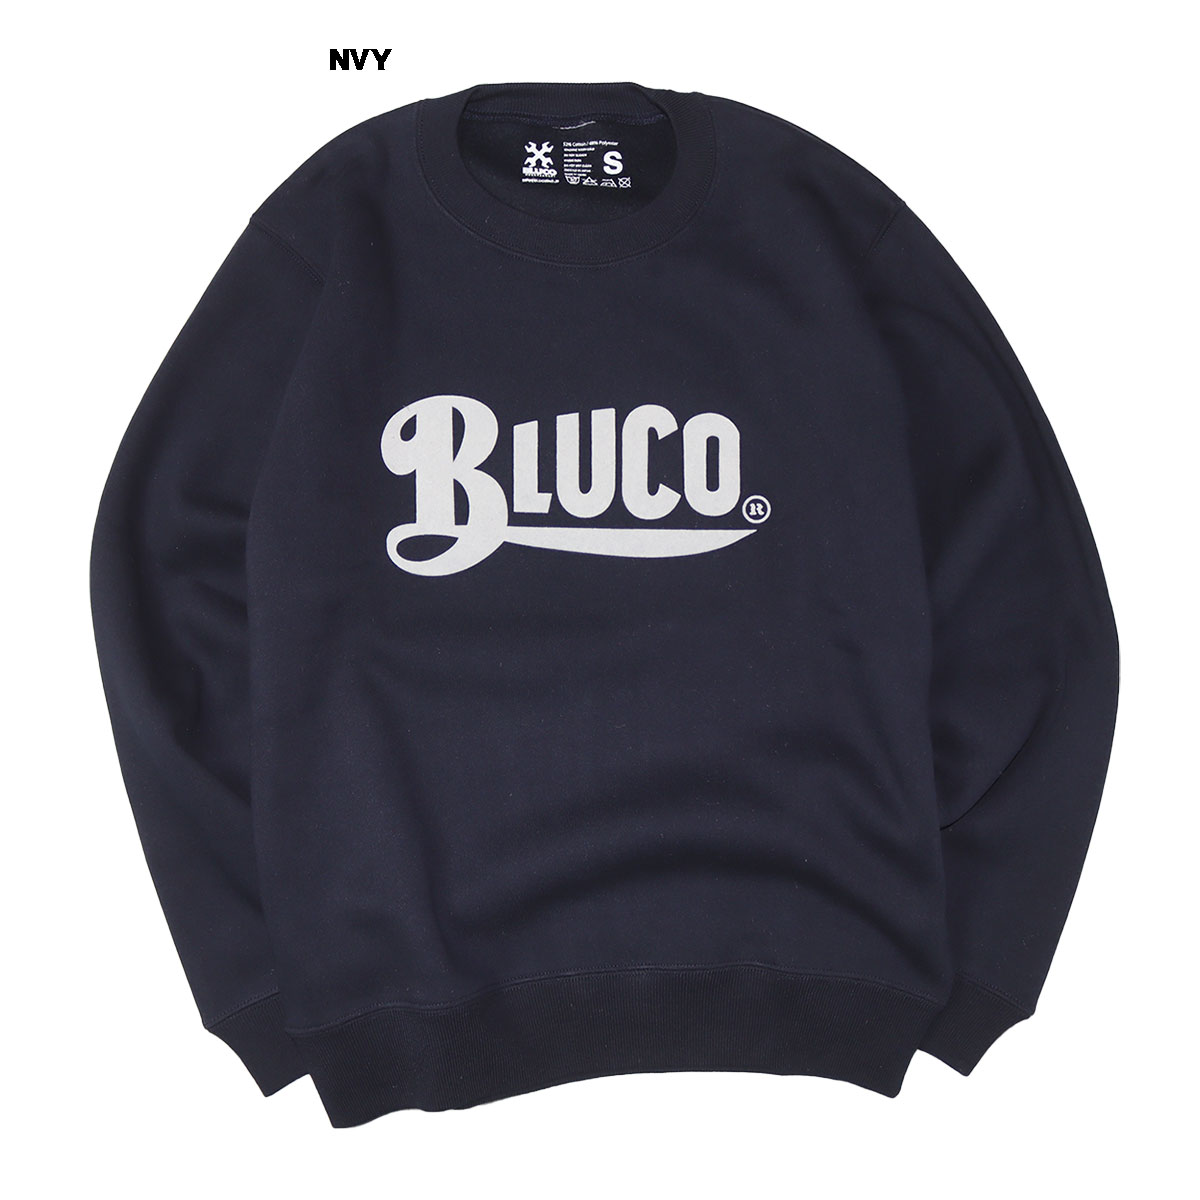 BLUCO(ブルコ) OL-1210 SWEATSHIRTS -Old Logo- 4色(GRY/S...